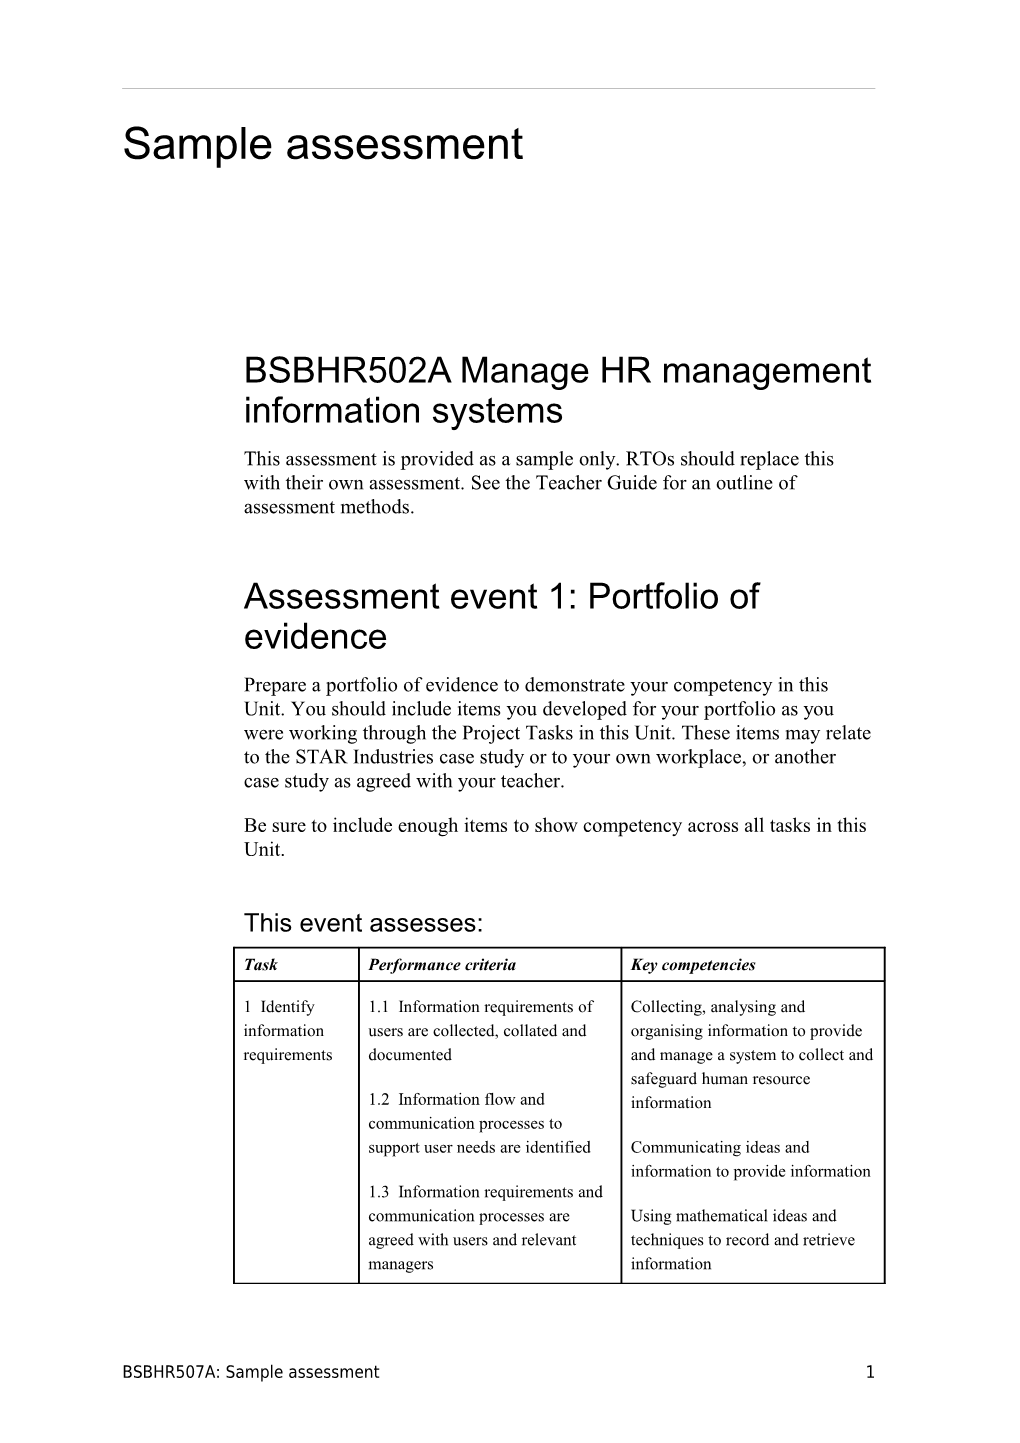 BSBHR502A Manage HR Management Information Systems